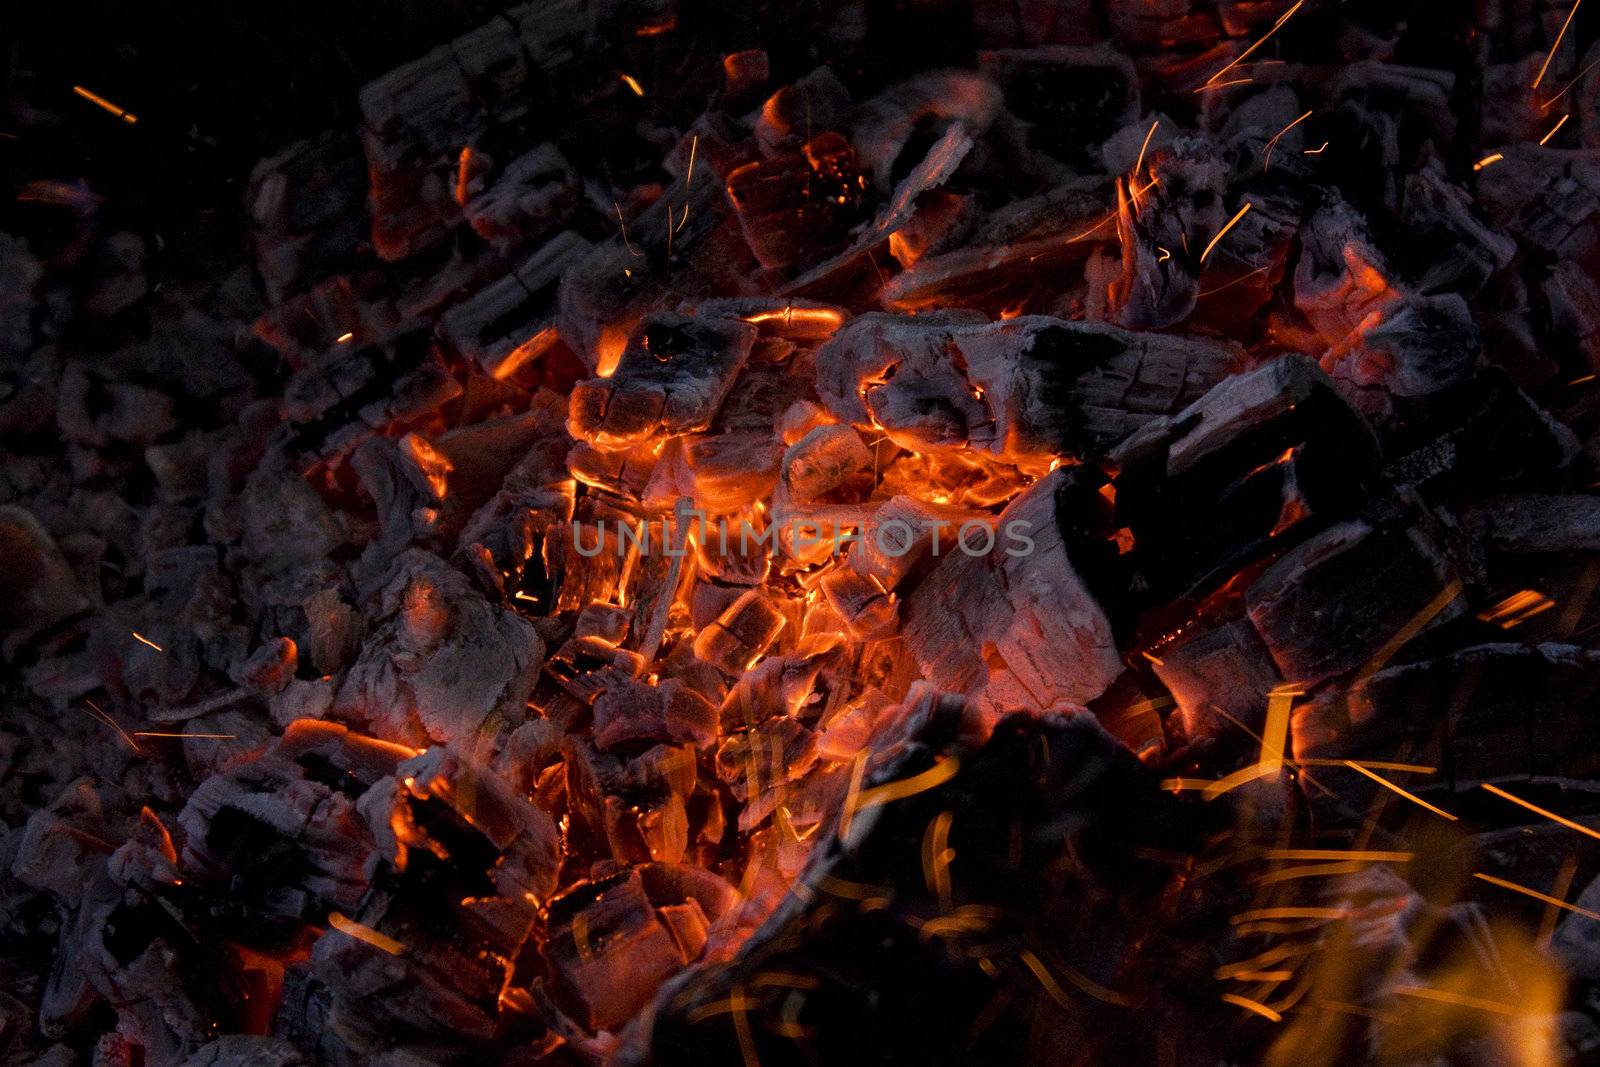 Hot embers by grigorenko